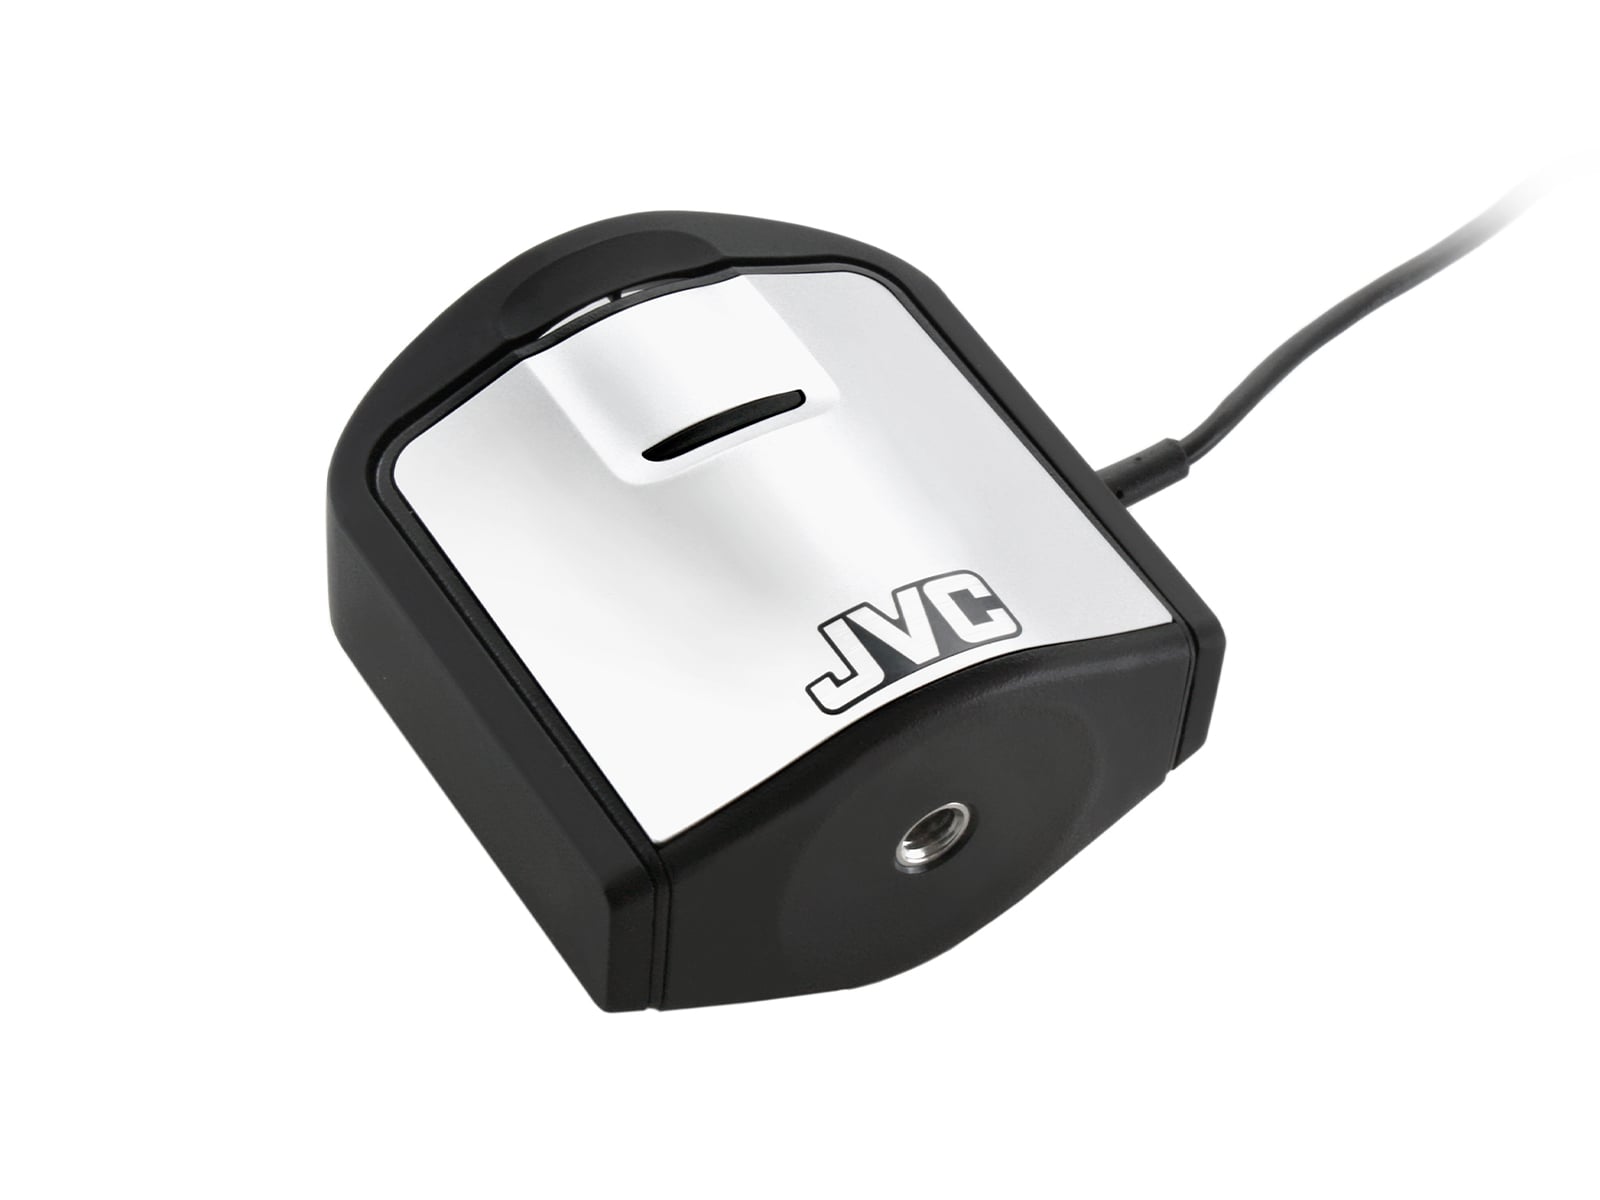 JVC Toトク メディバイザー NX キャリブレーション センサー キット (QA ソフトウェア付き) (CAL-016) Monitors.com